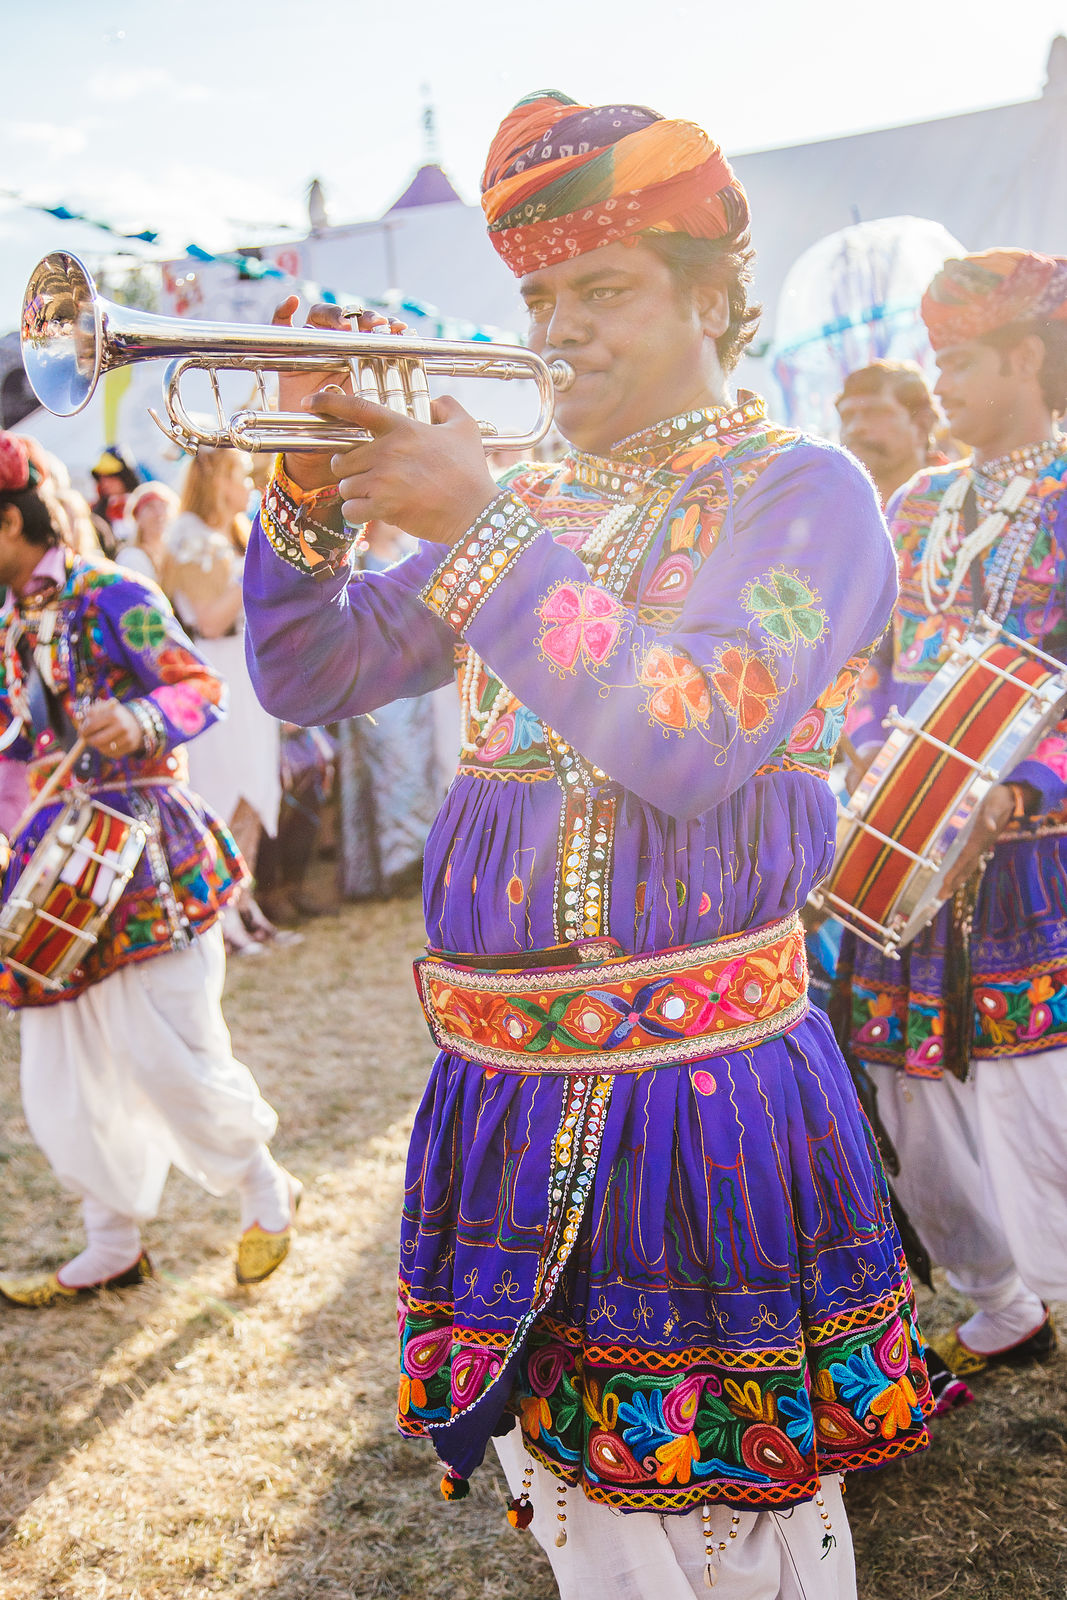 Shambala Carnival